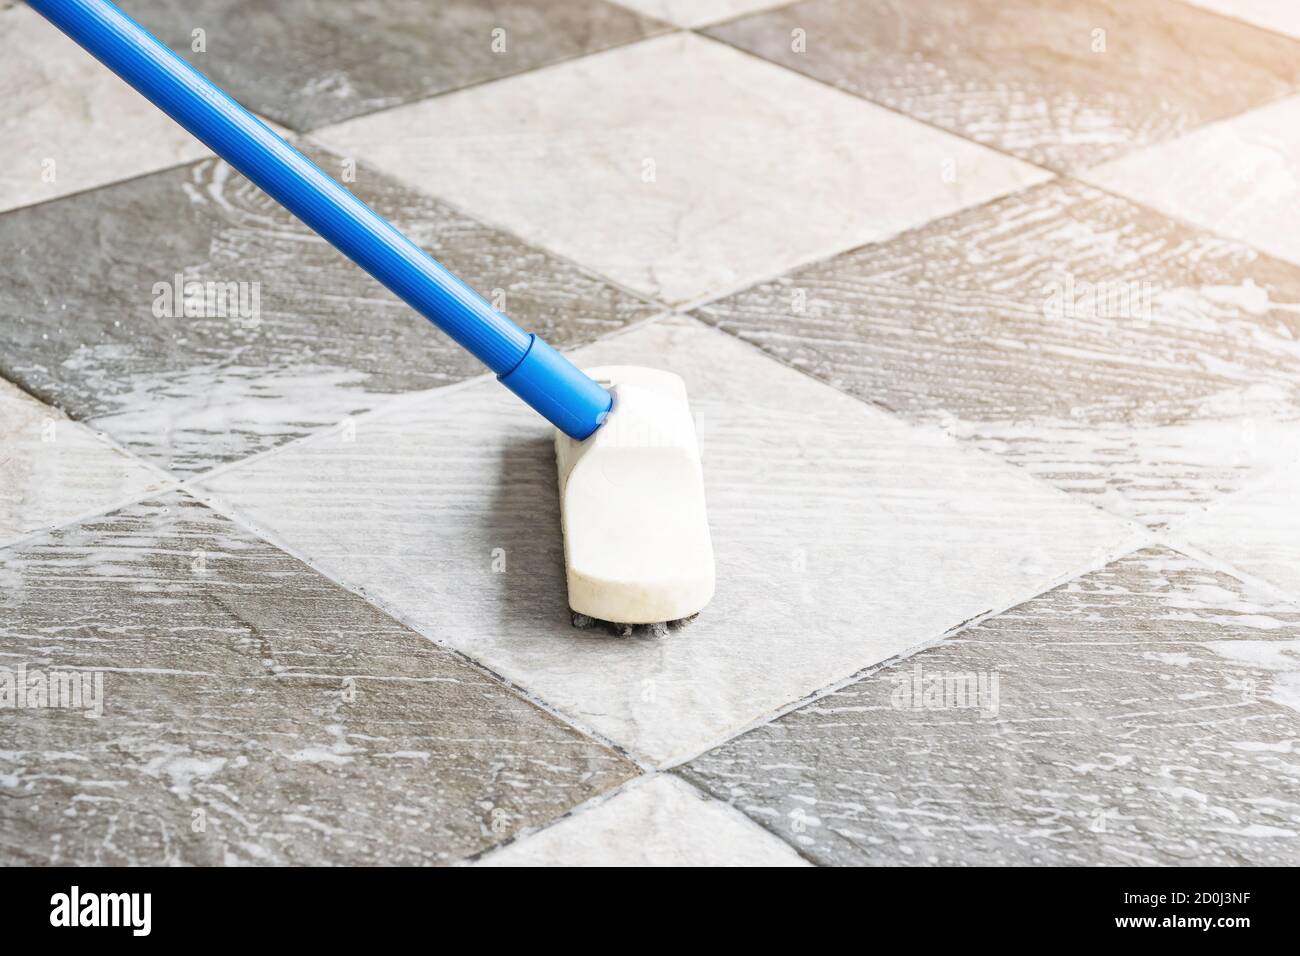 https://c8.alamy.com/comp/2D0J3NF/cleaning-the-tile-floor-with-floor-scrubber-brush-2D0J3NF.jpg